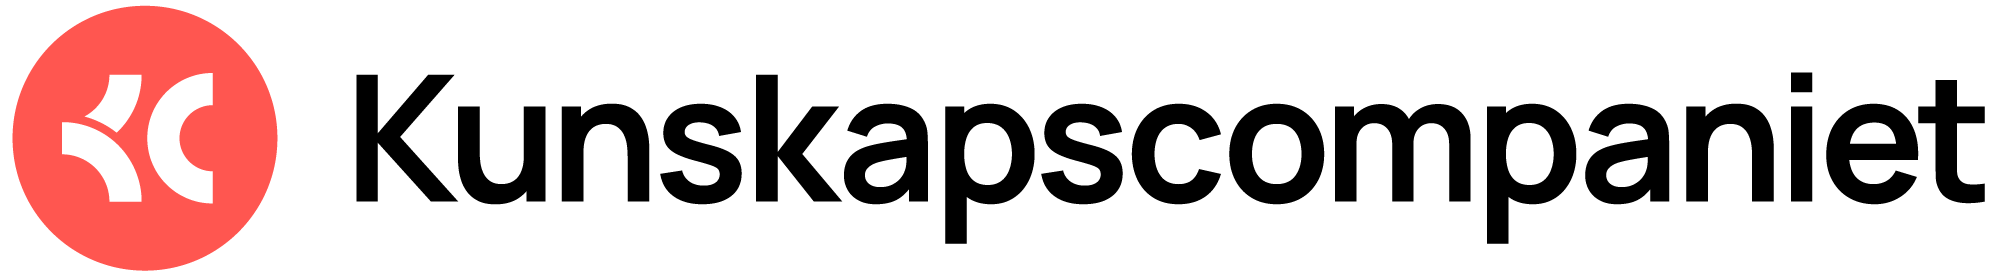 kunskapscompaniet-logo